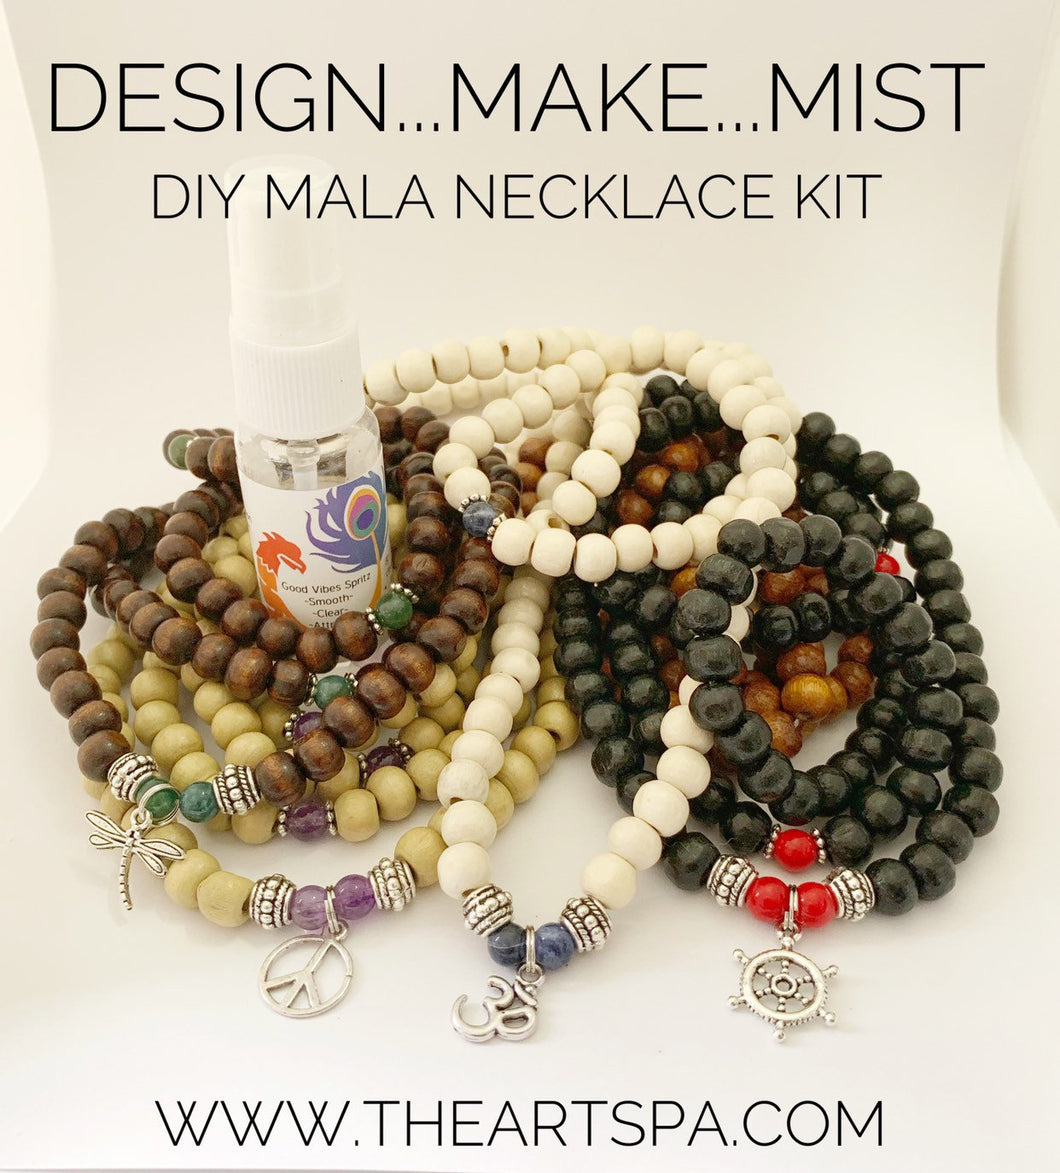 Design..Make..Mist - DIY Necklace Kit - Create Your Own Mala Necklace - DIY Kit - 108 Beads - Prayer Beads - Custom Mala Necklace Kit